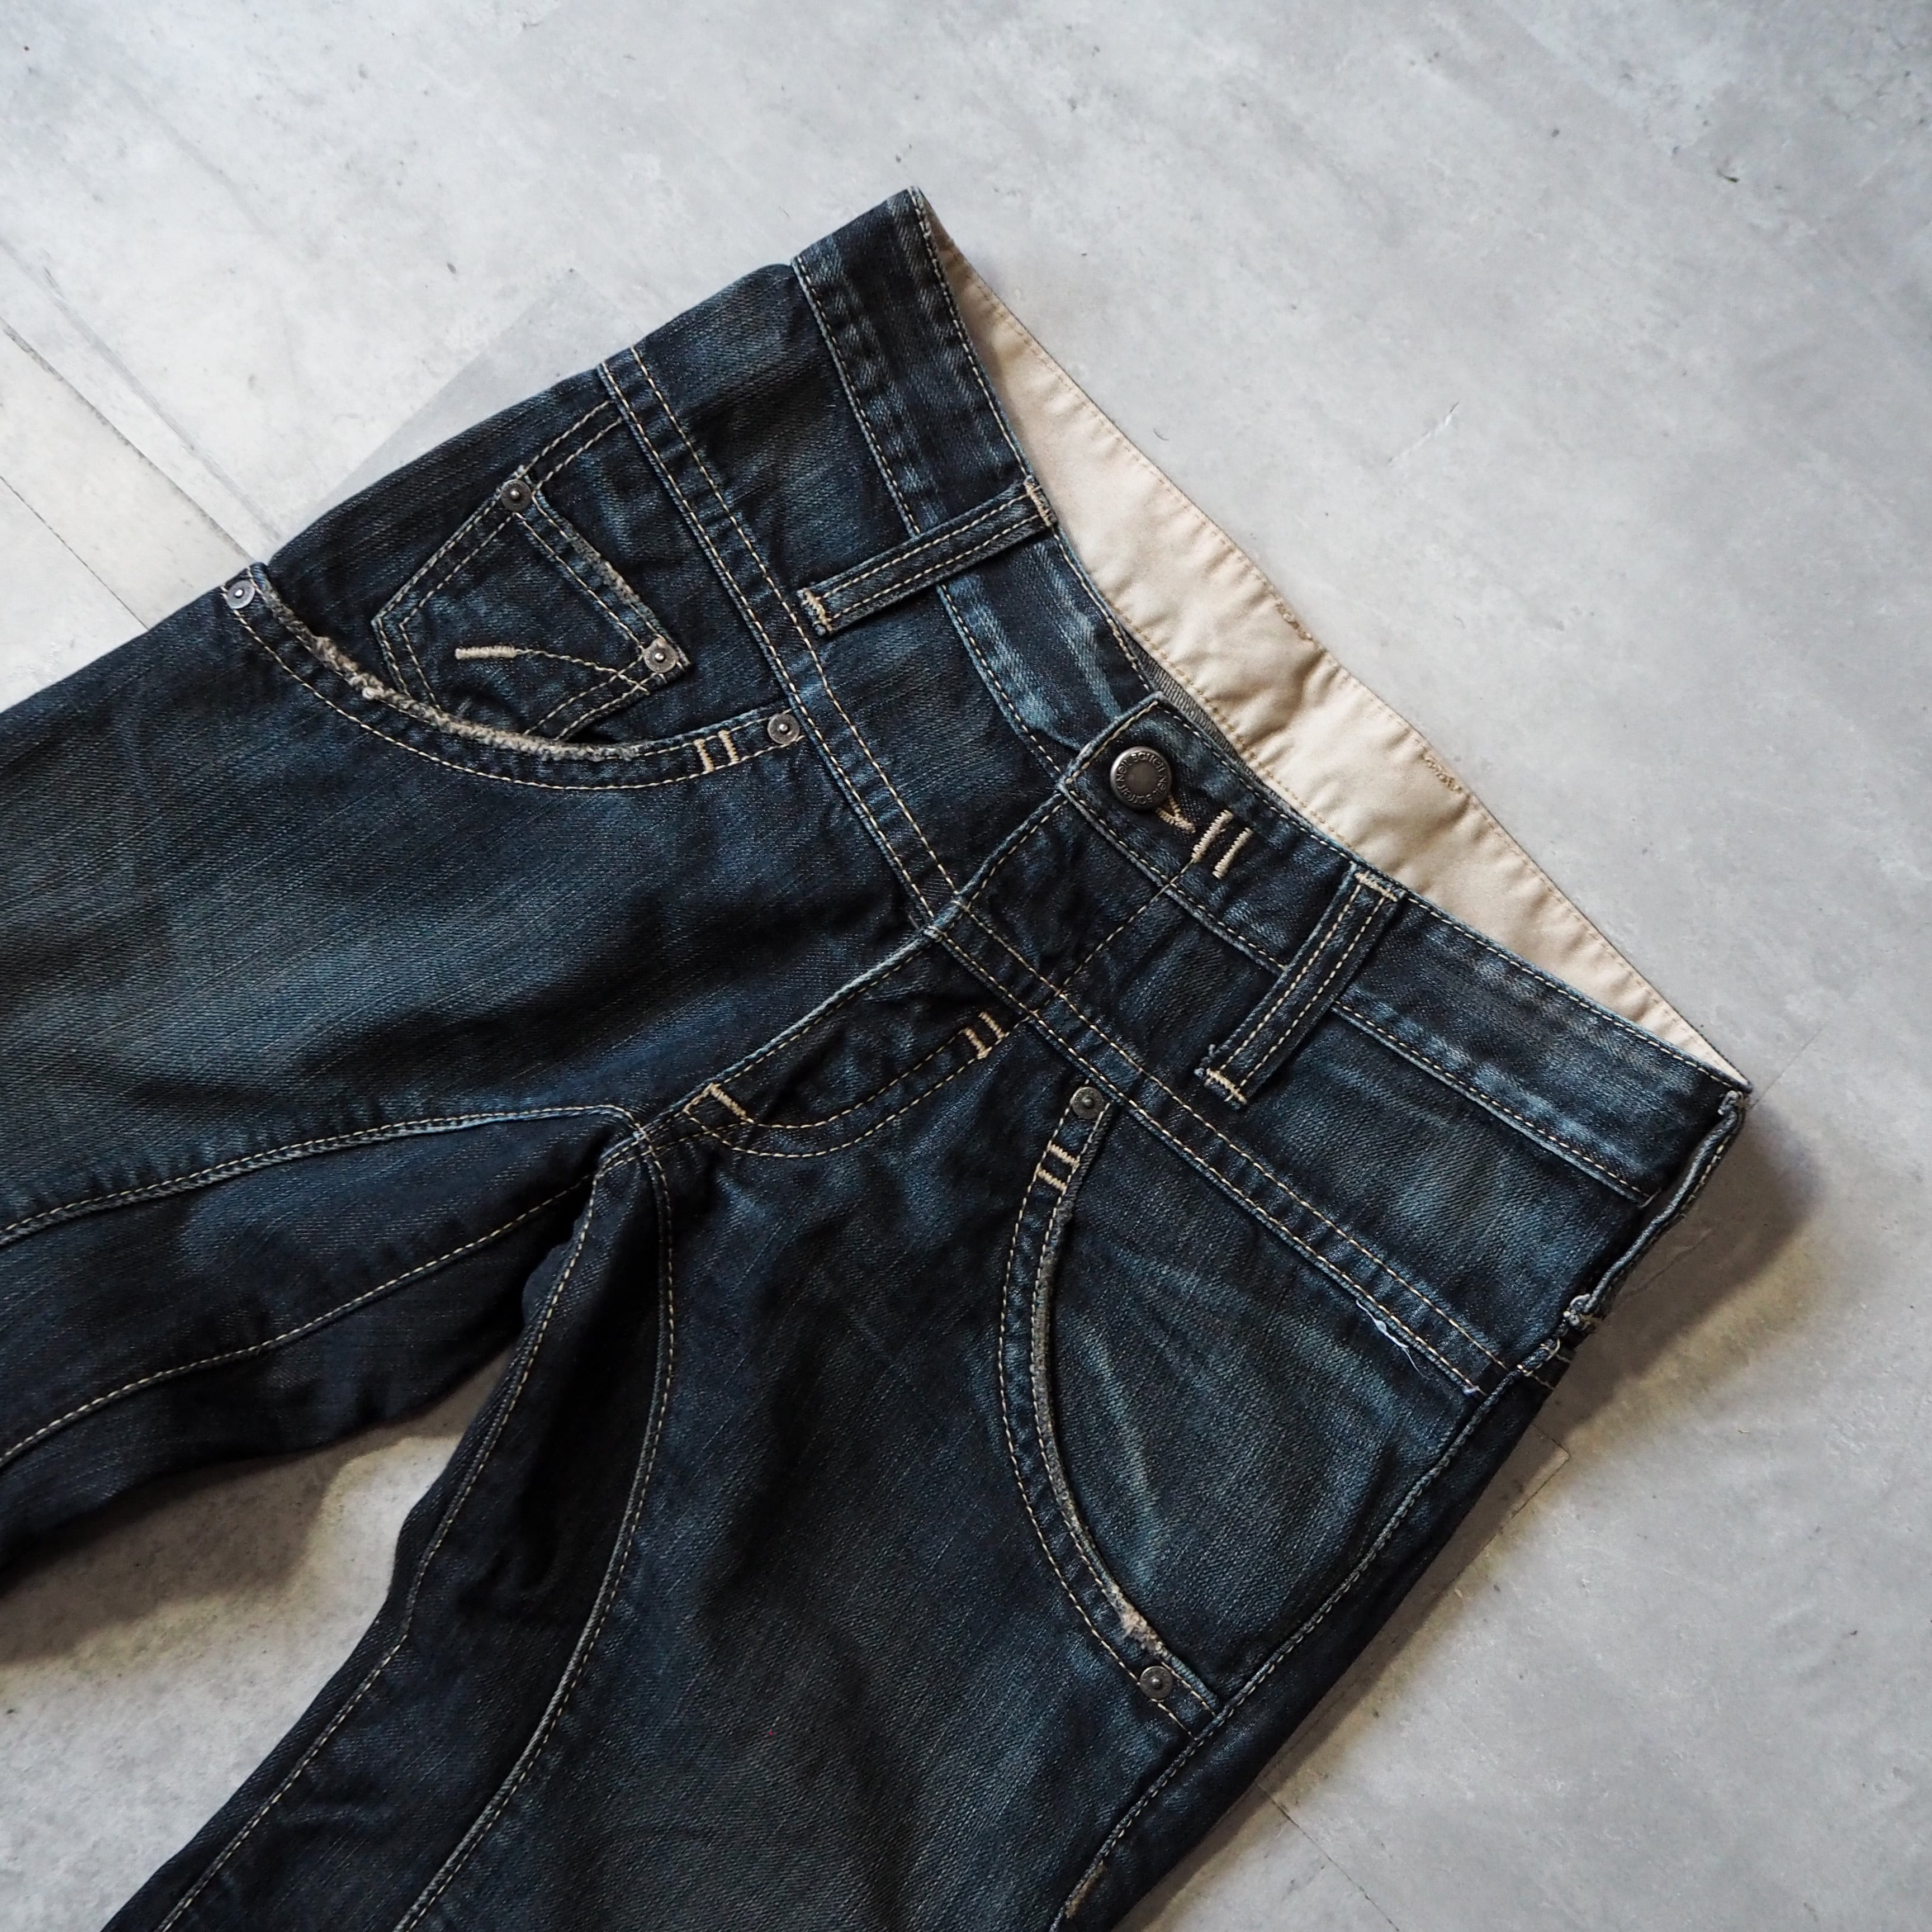 00s “NEIL BARRETT INDIGO” design denim pants made in Itary ...